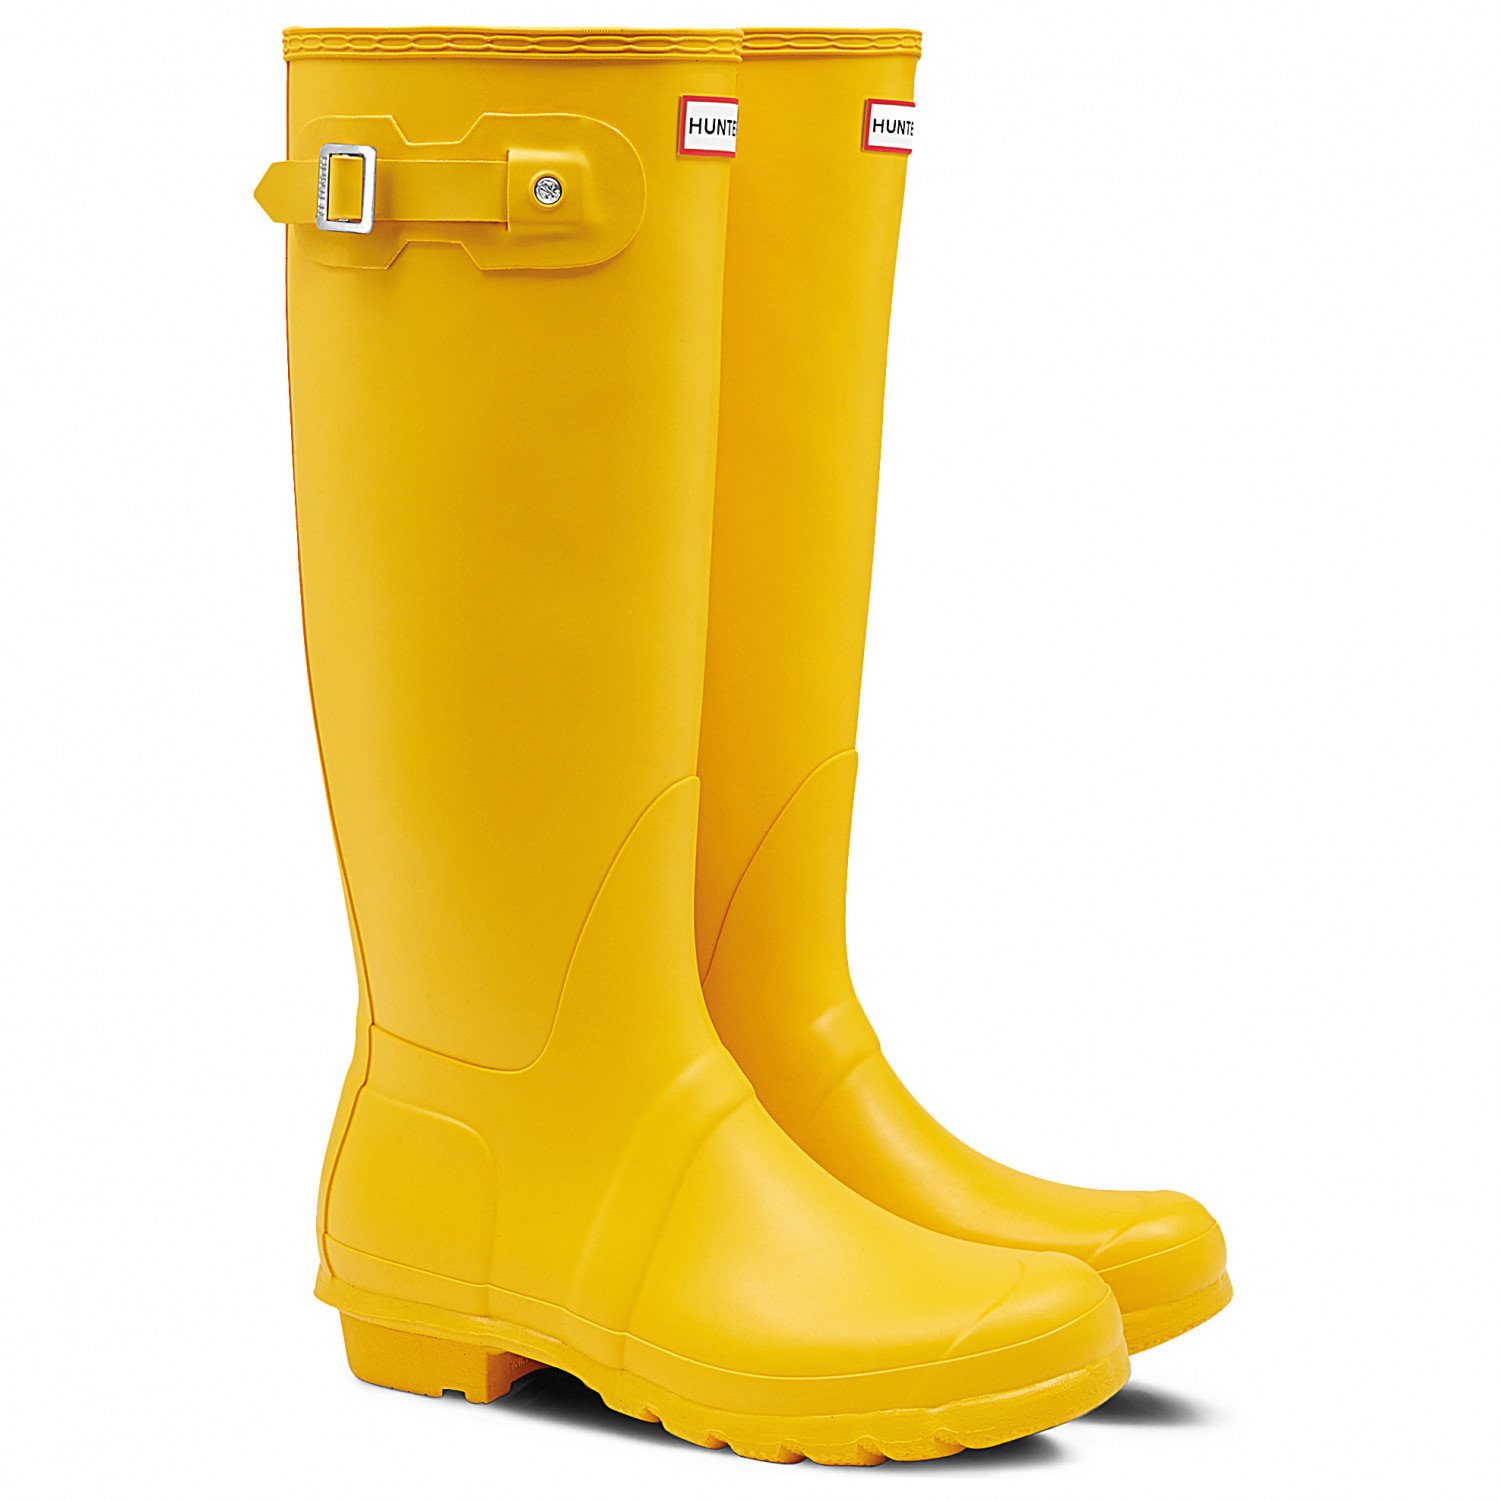 Резиновые сапоги Hunter Boots Women's Original Tall, желтый цена и фото